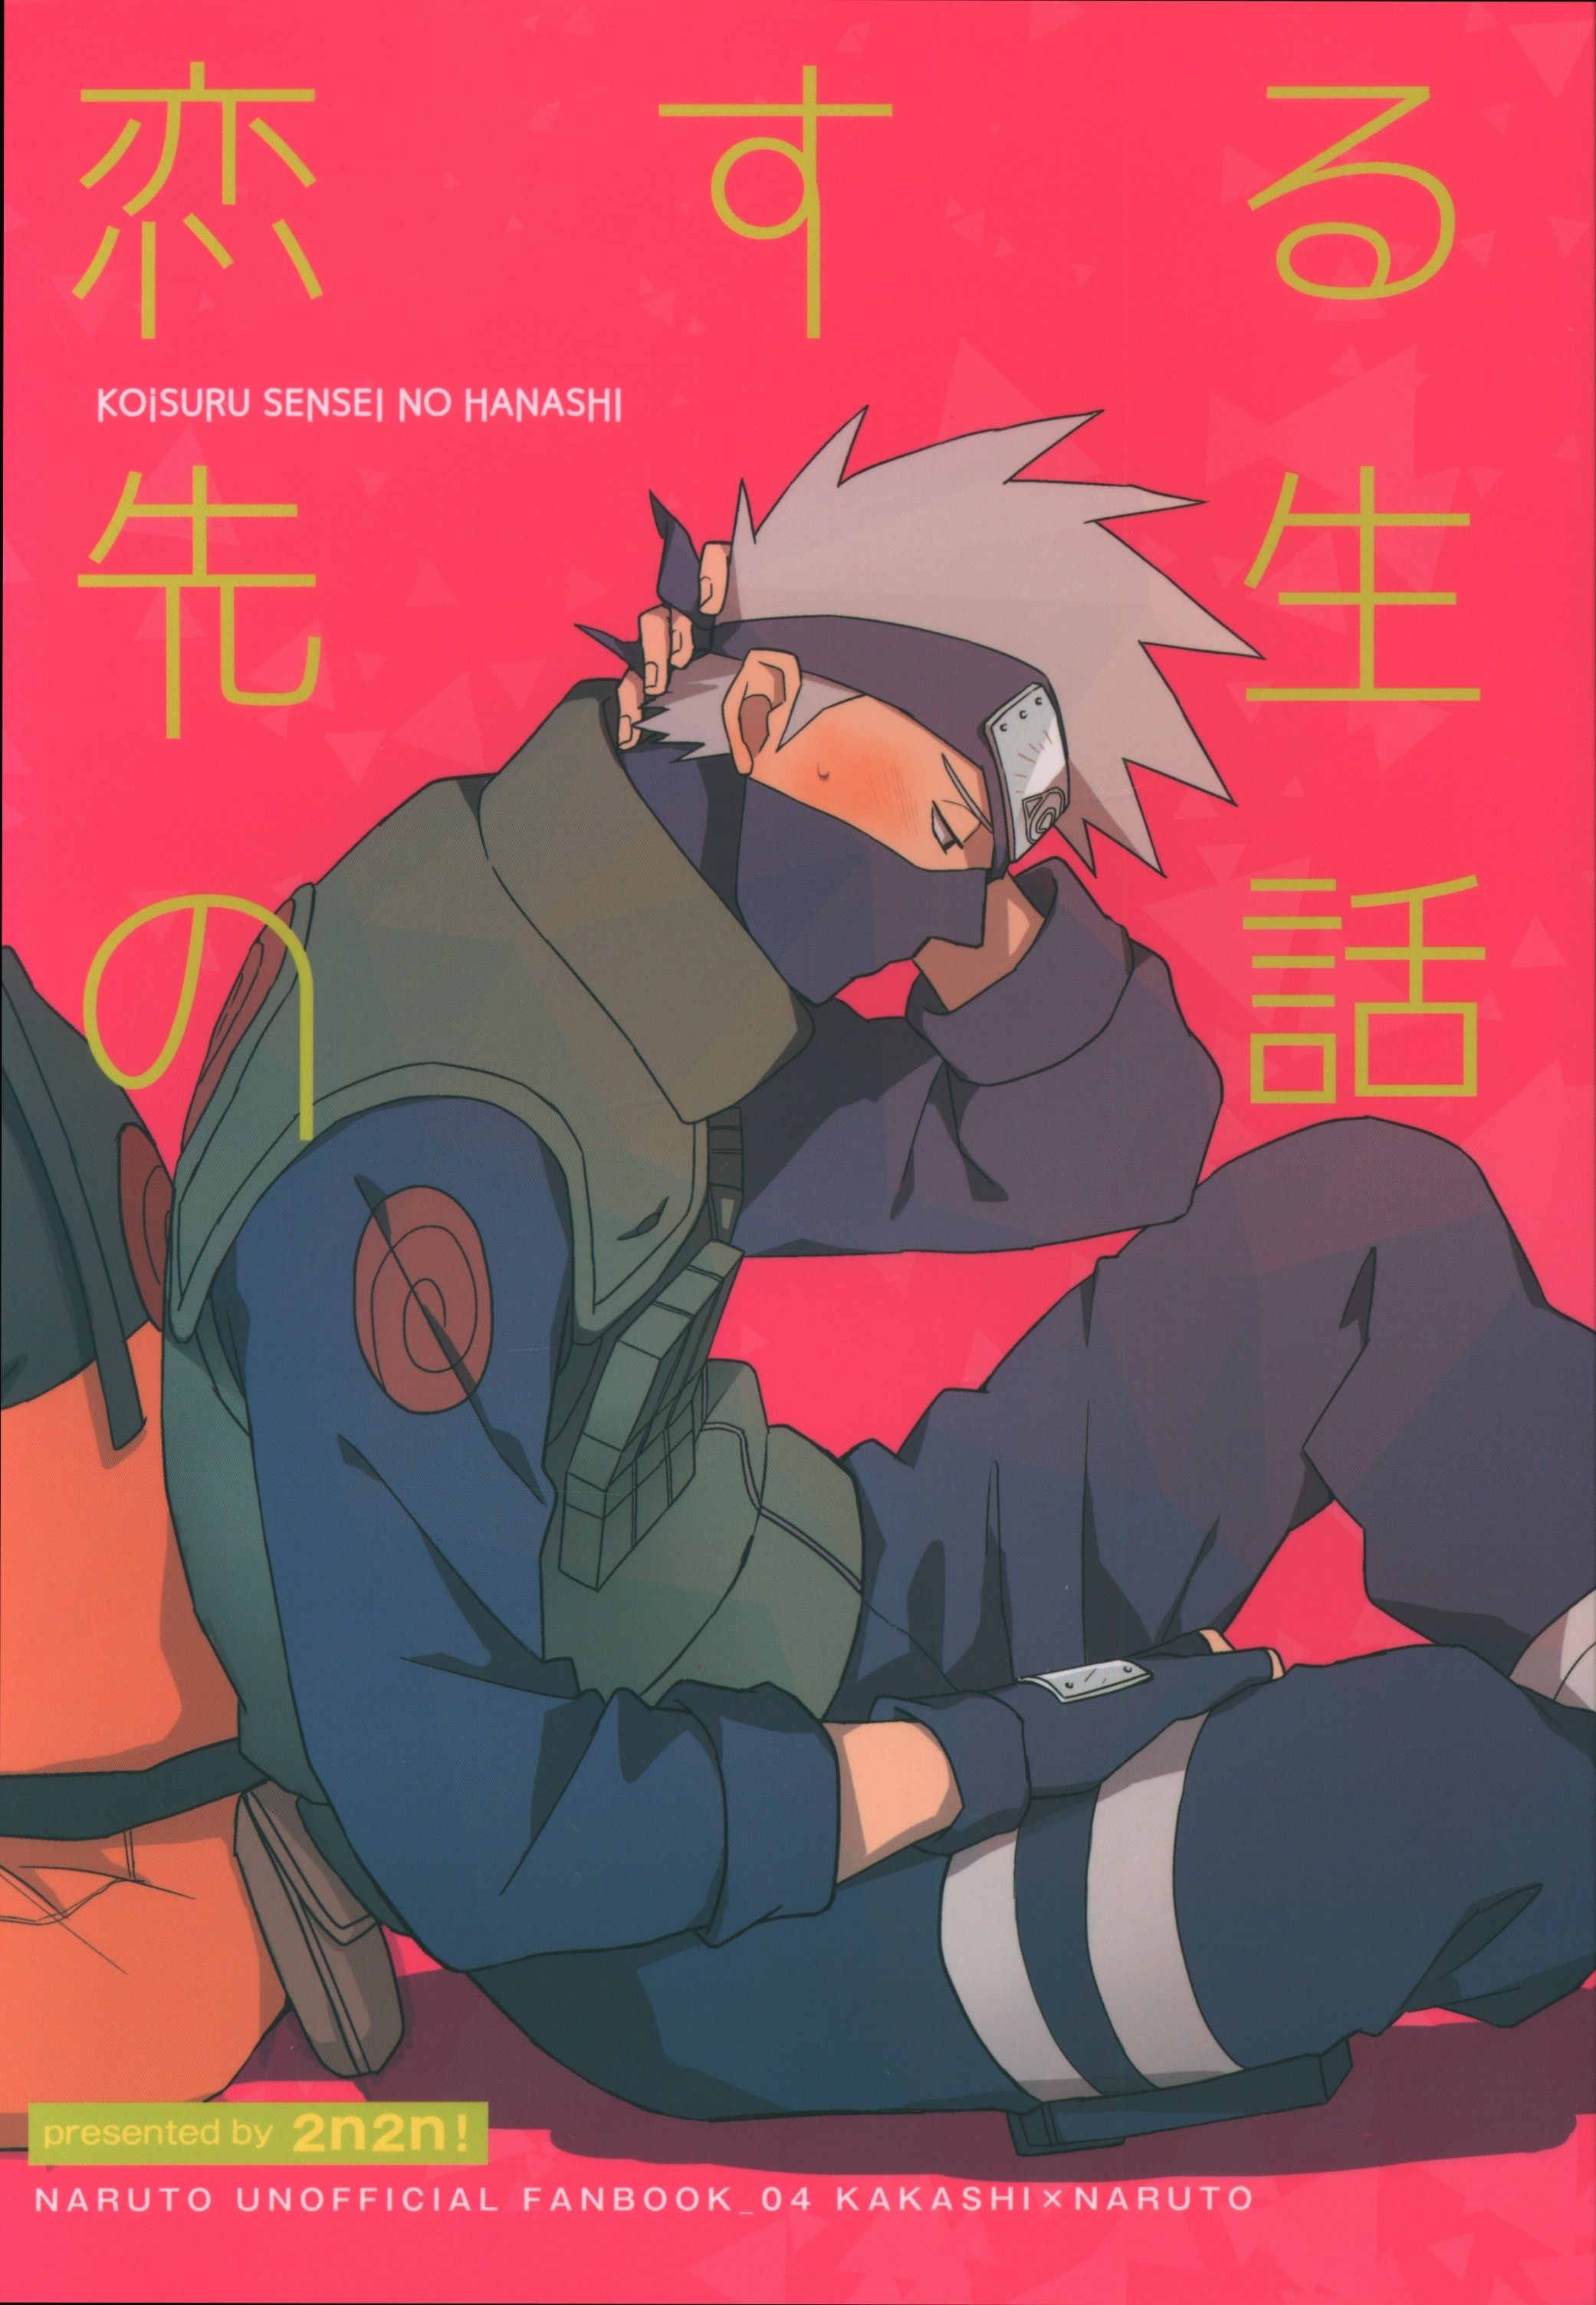 Cover of Naruto fanbook 04 featuring Kakashi sitting on the ground - Kakashi Hatake